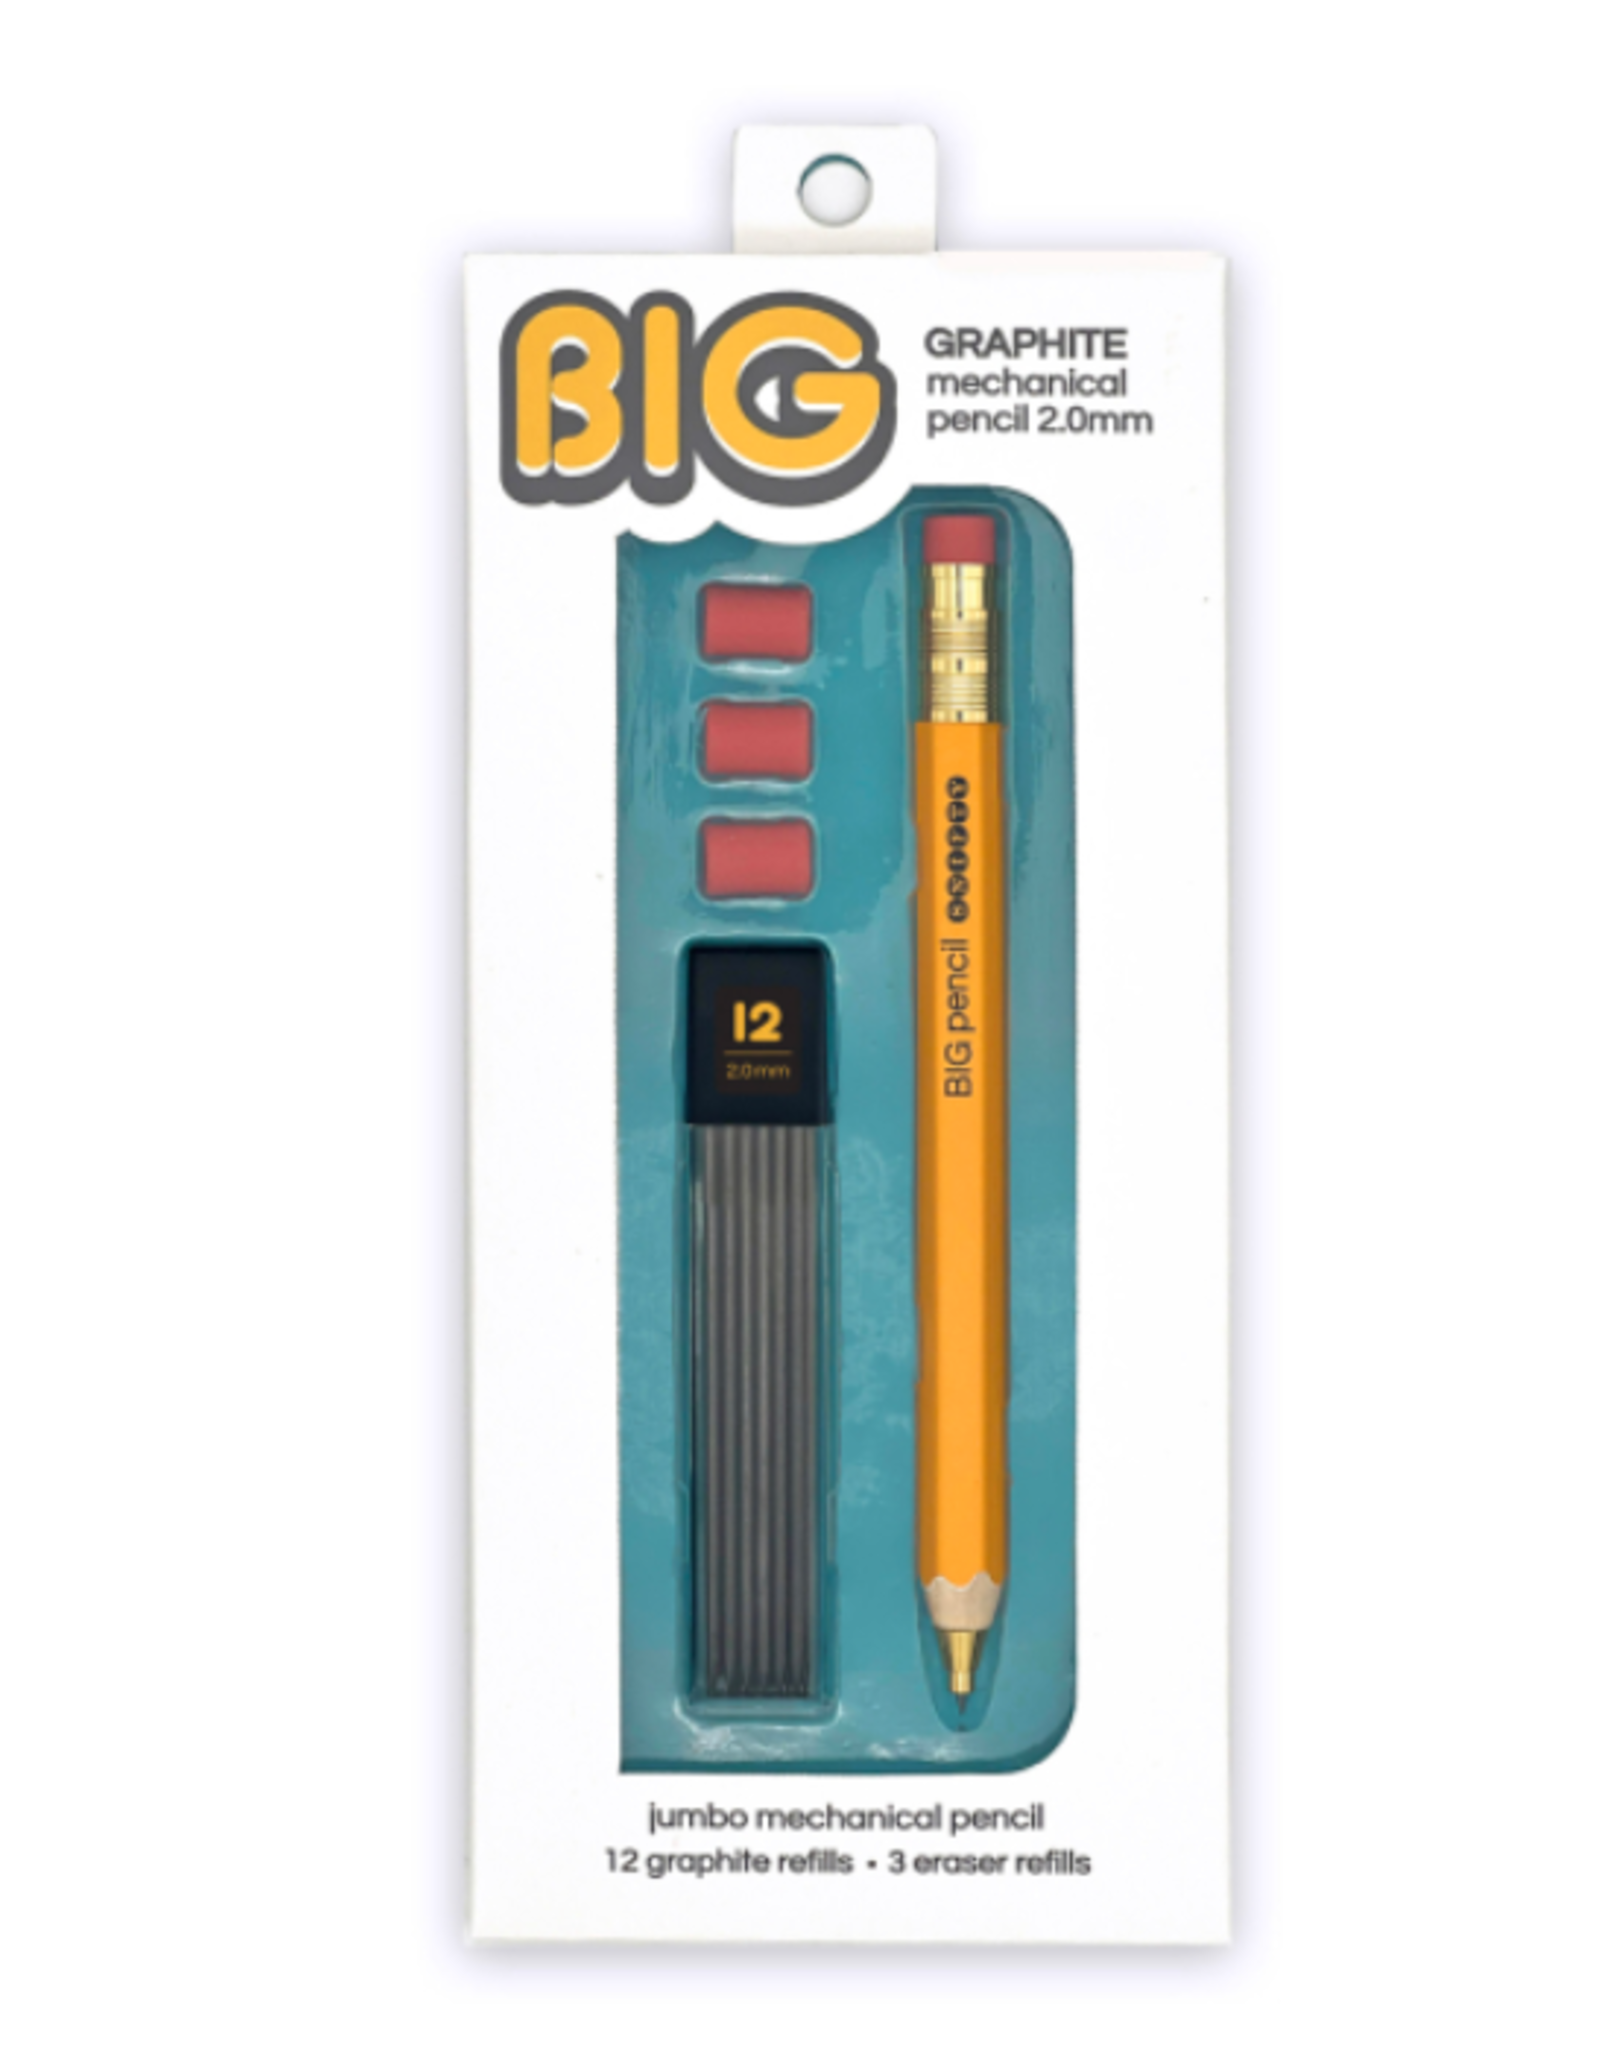 Snifty Pencil - BIG Graphite Mechanical Pencil